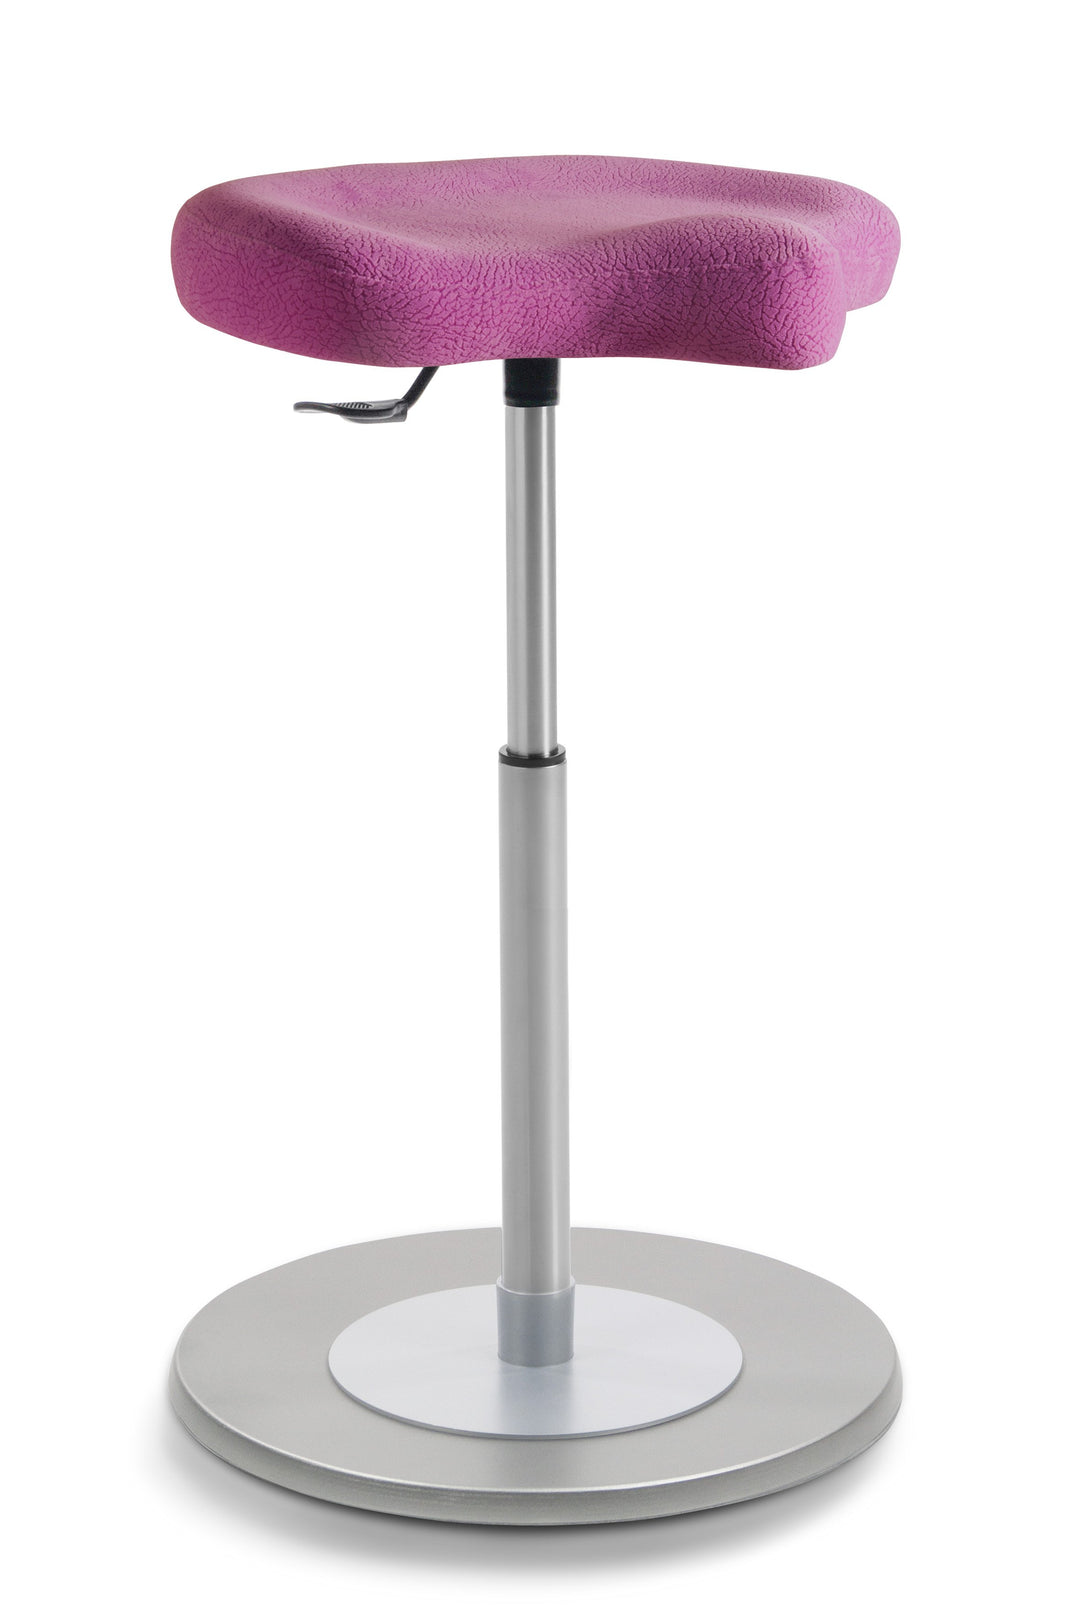 Mayer MyErgosit Taboret Krzesło Stołek balansujący ergonomiczny 54-79cm podstawa srebrna 1168 EF